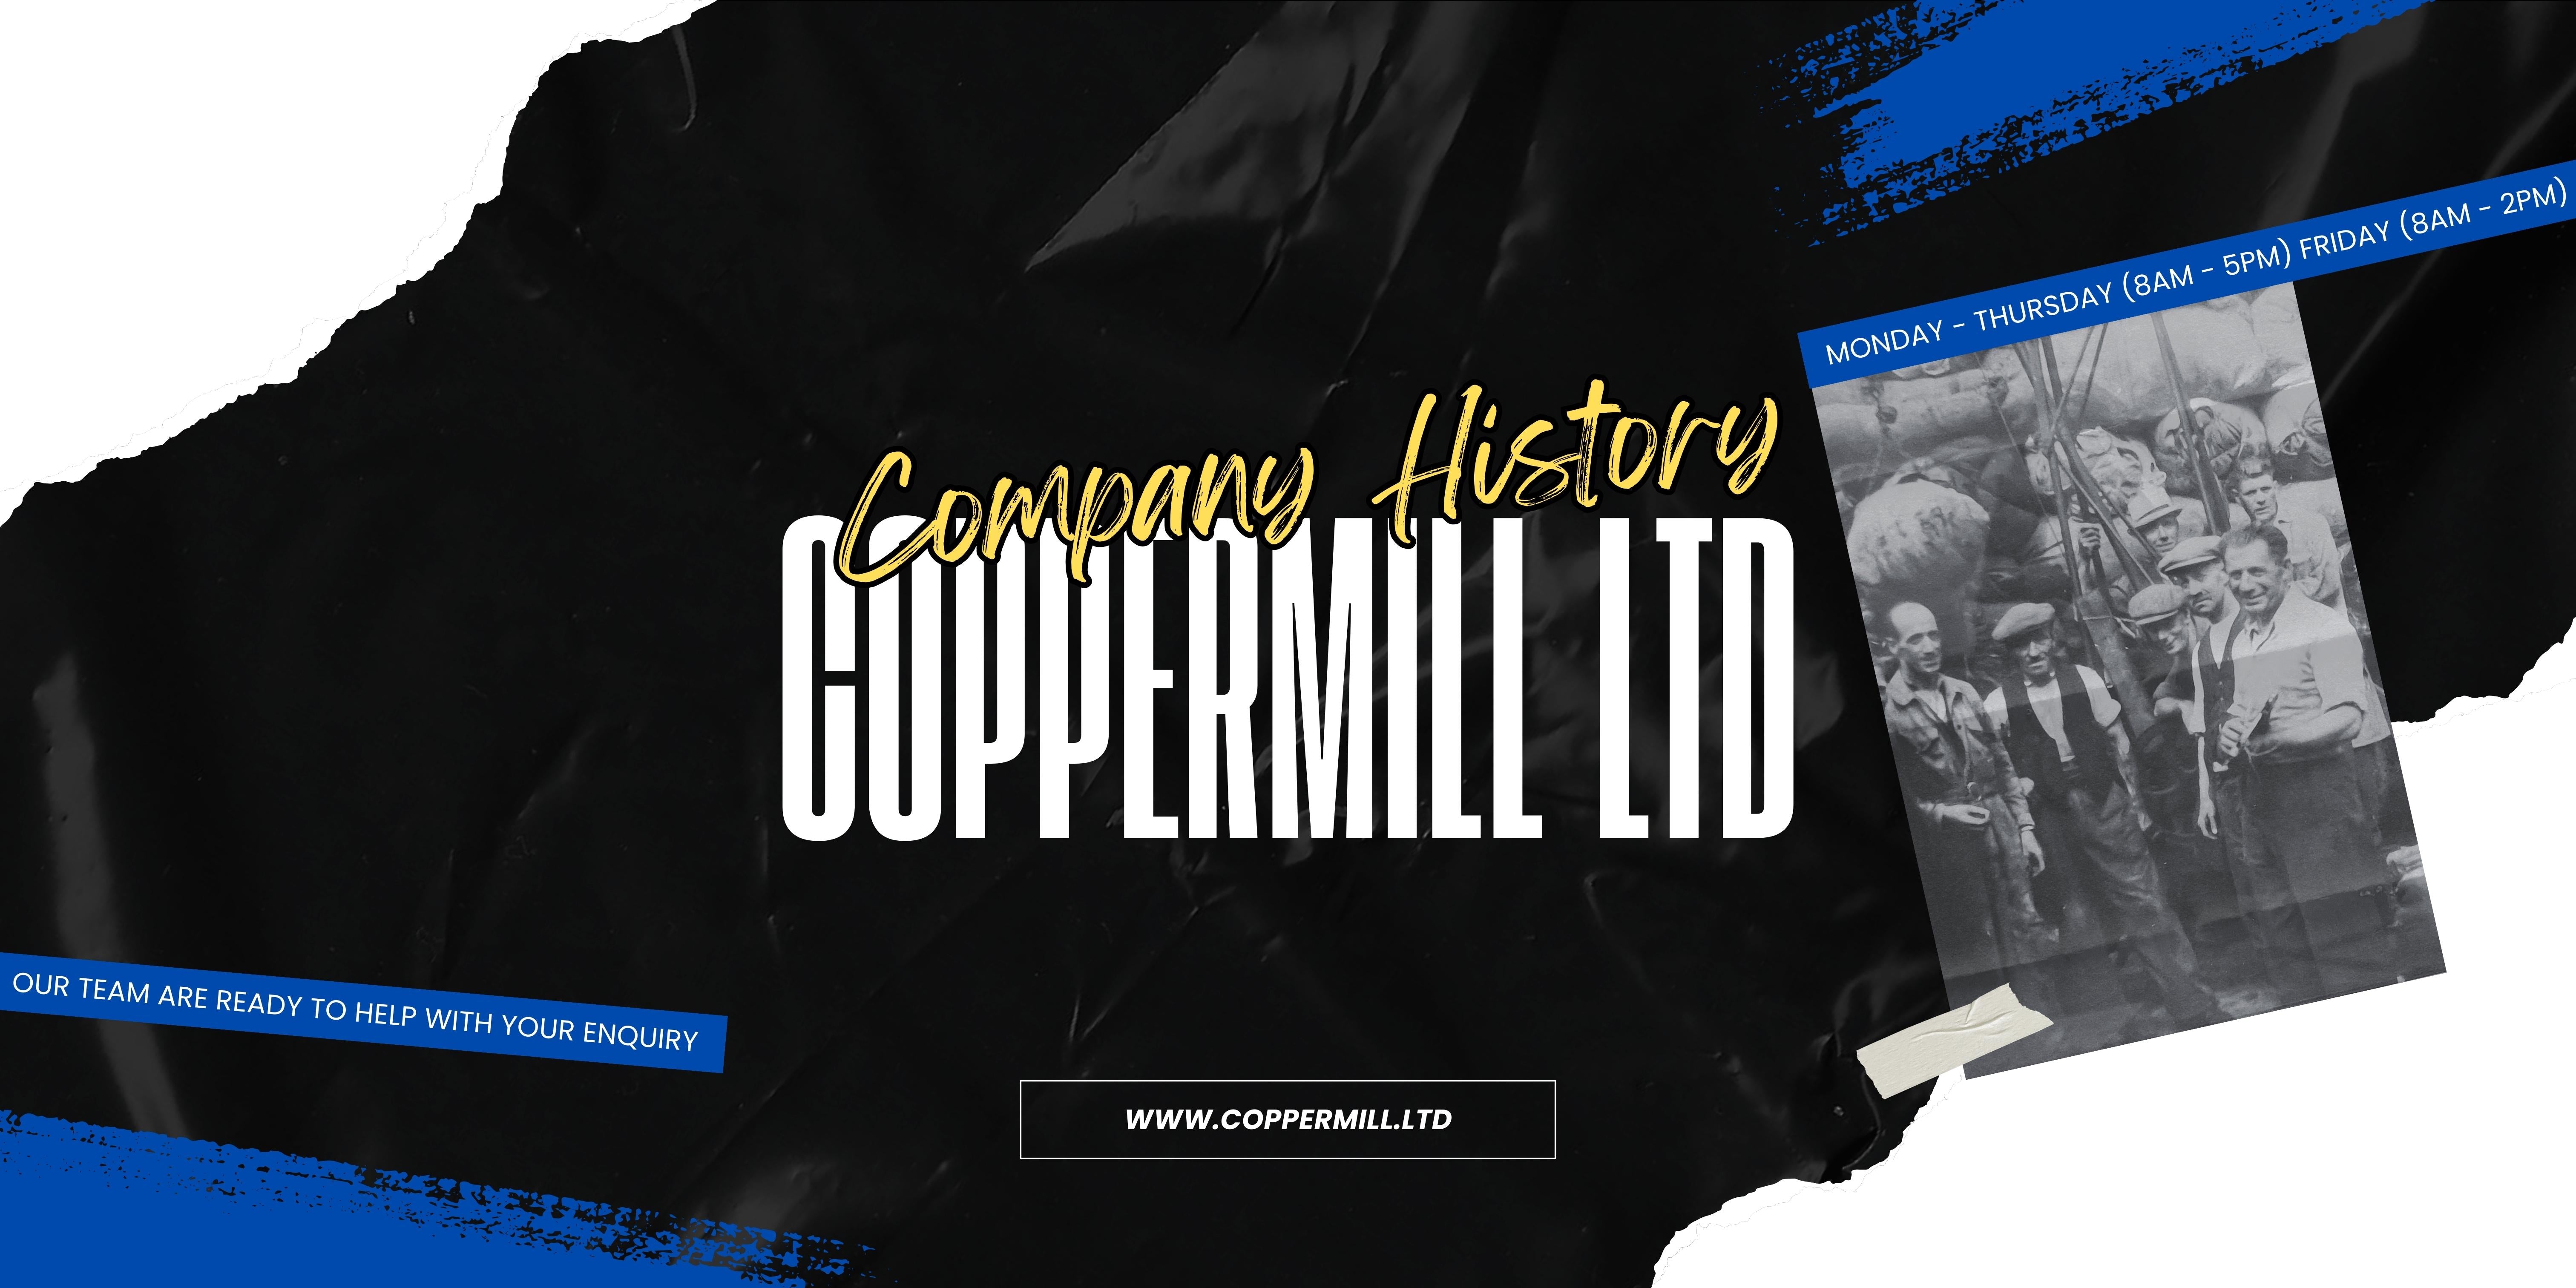 Coppermill Ltd Company History